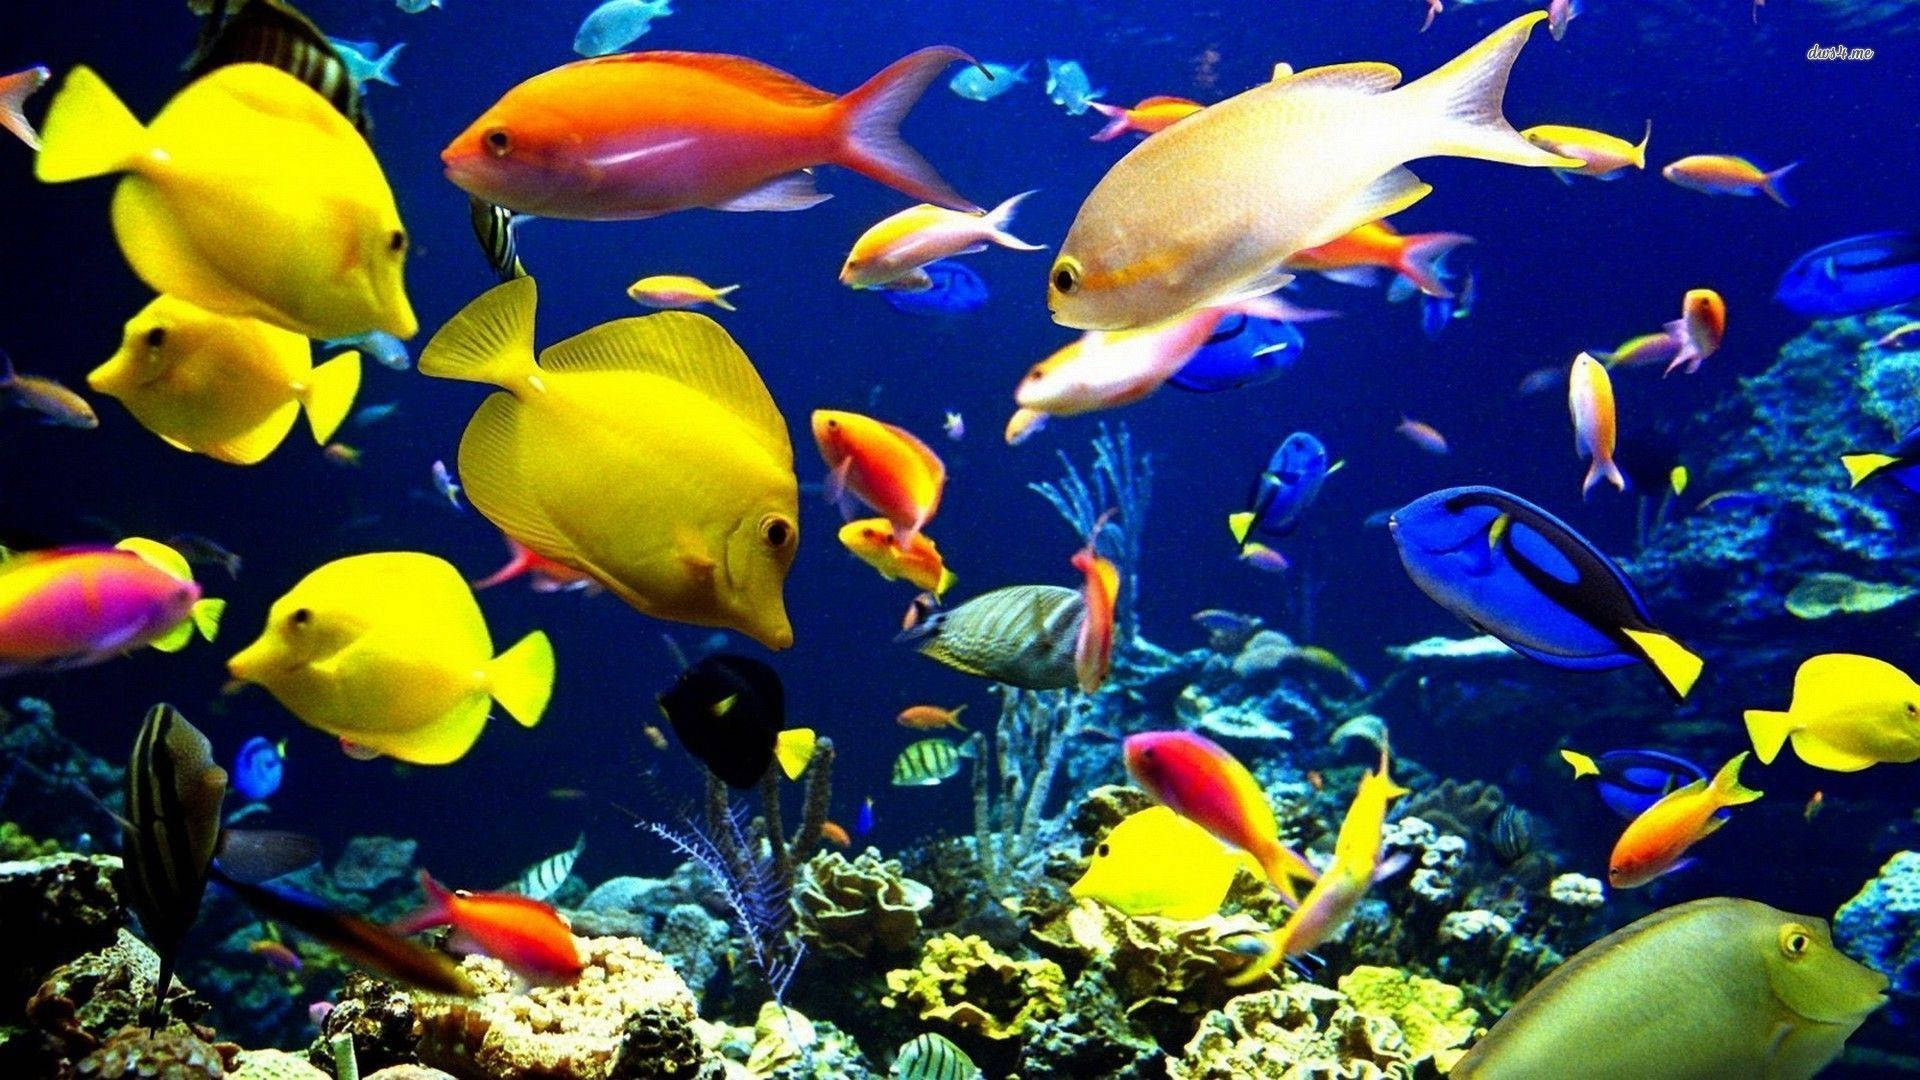 A Breeder of Colorful Tropical Fish Amidst Vibrant Corals Wallpaper